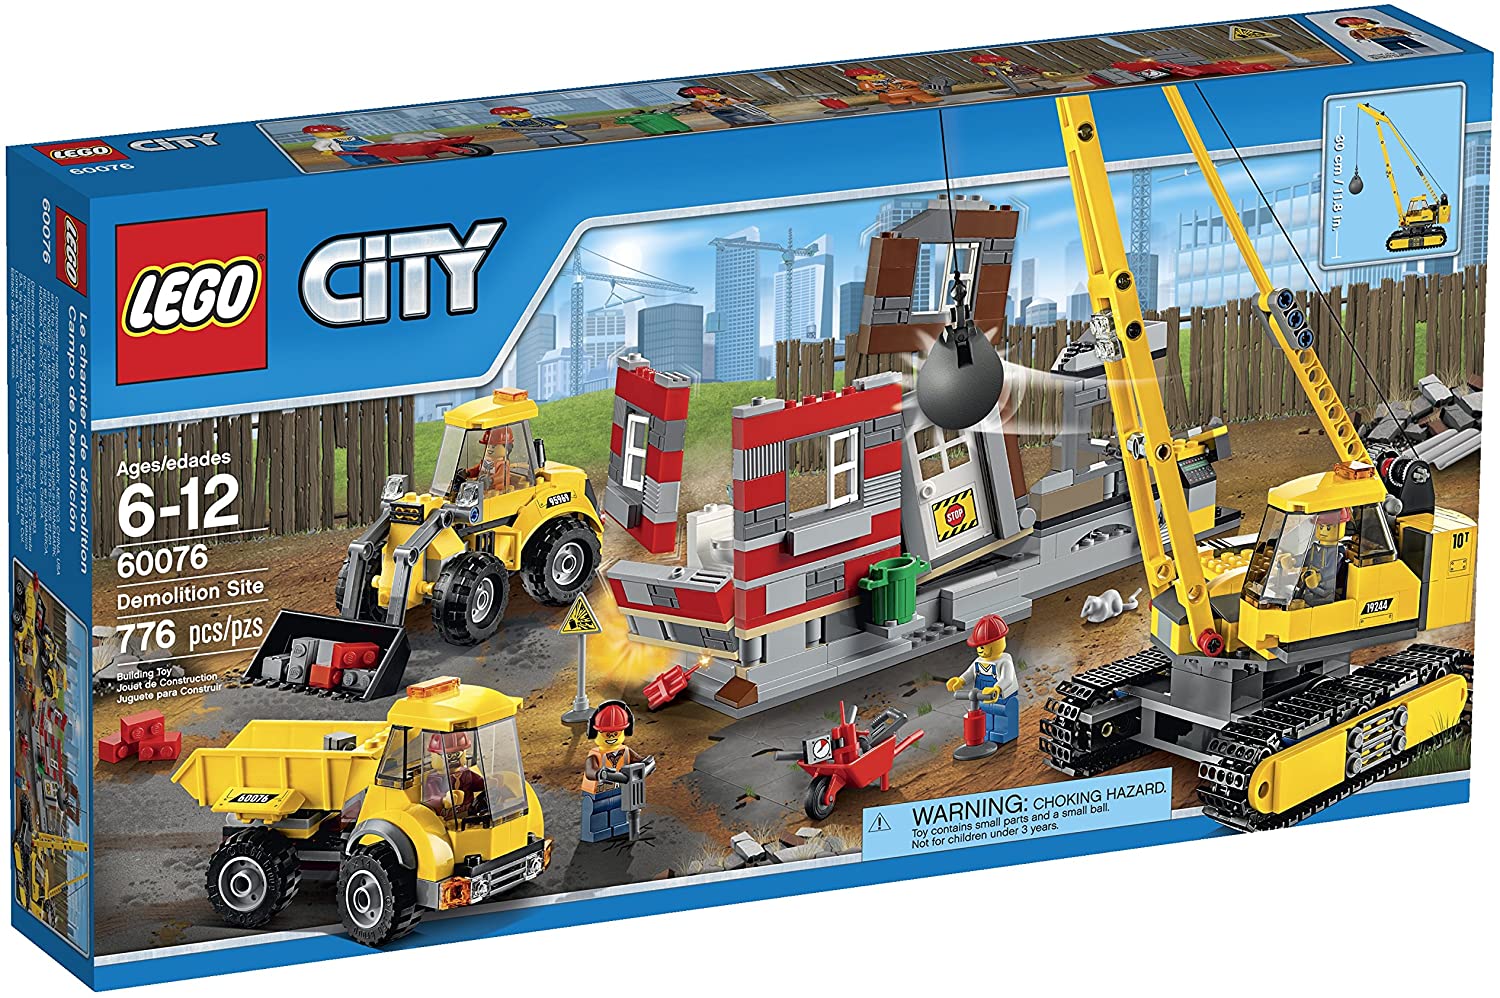 LEGO City Demolition Sit Set 60076